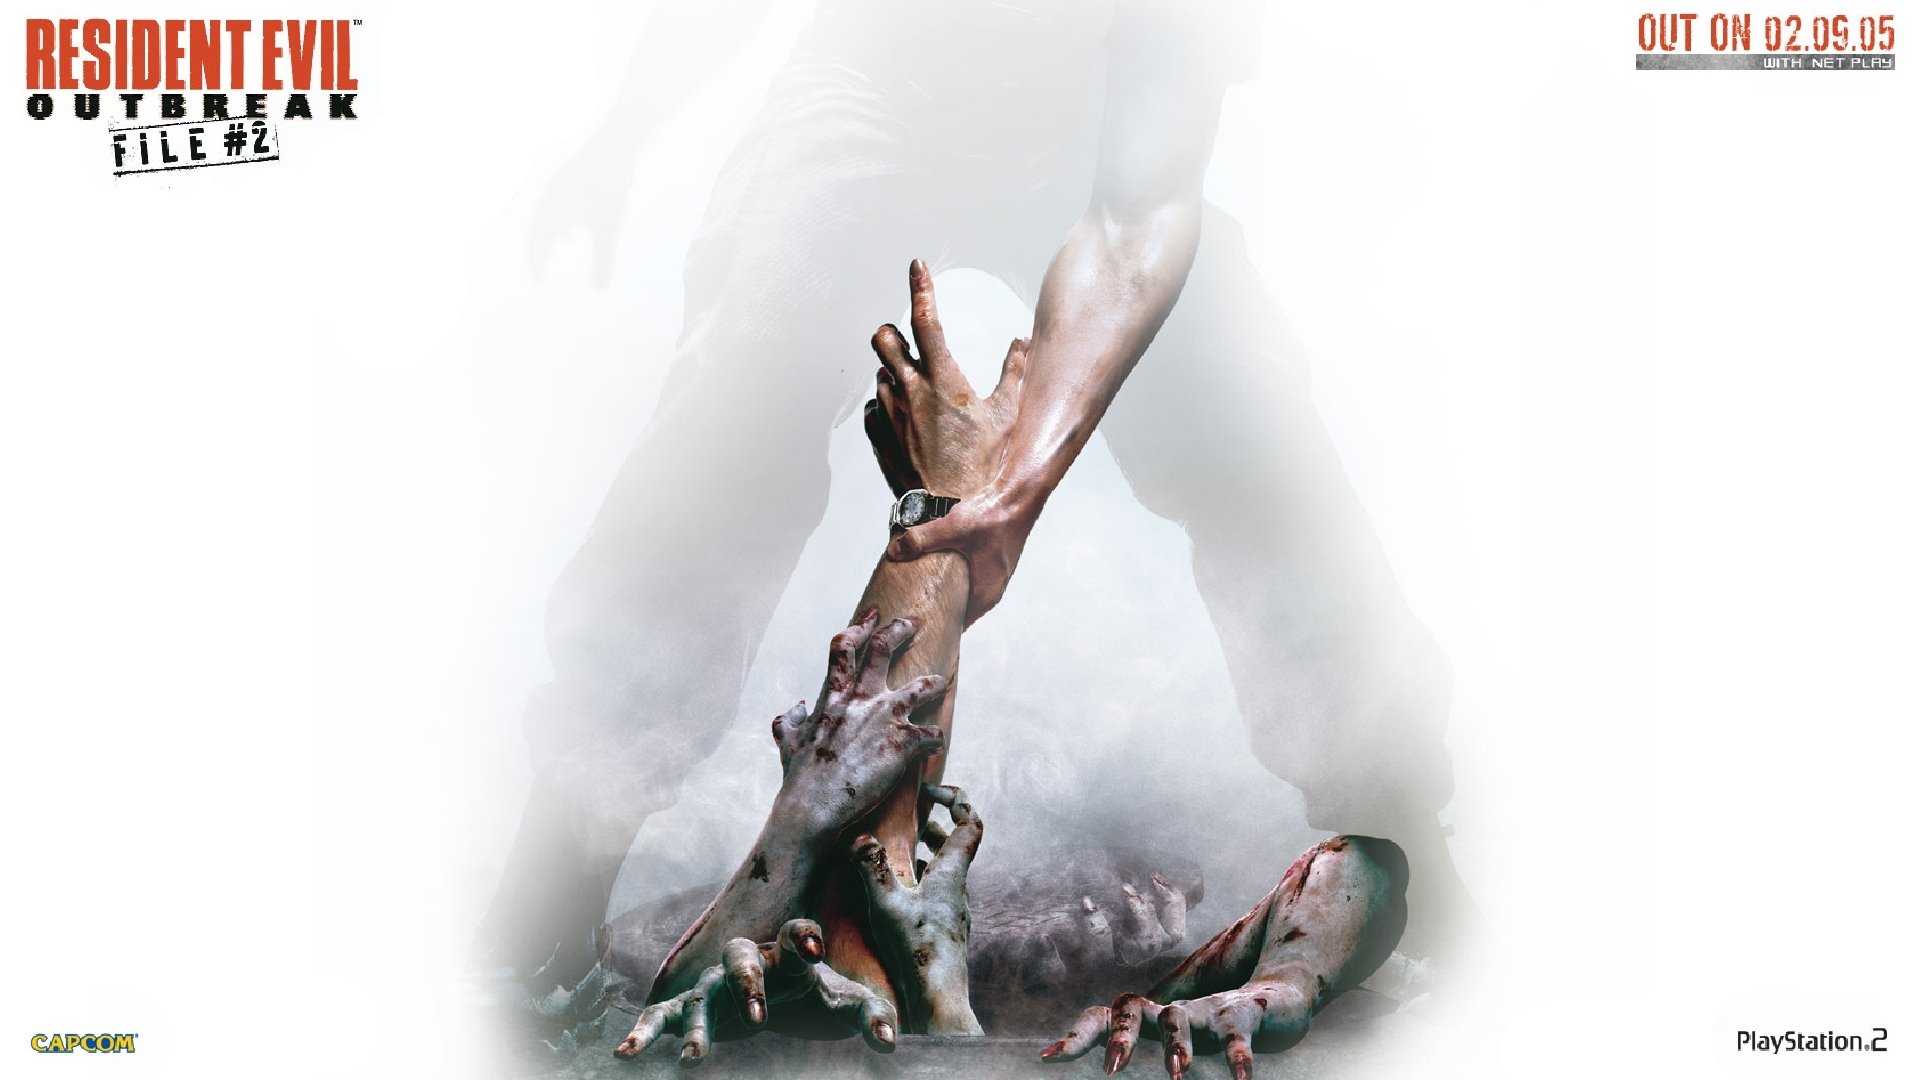 Resident Evil Outbreak HD Wallpaper Background Image